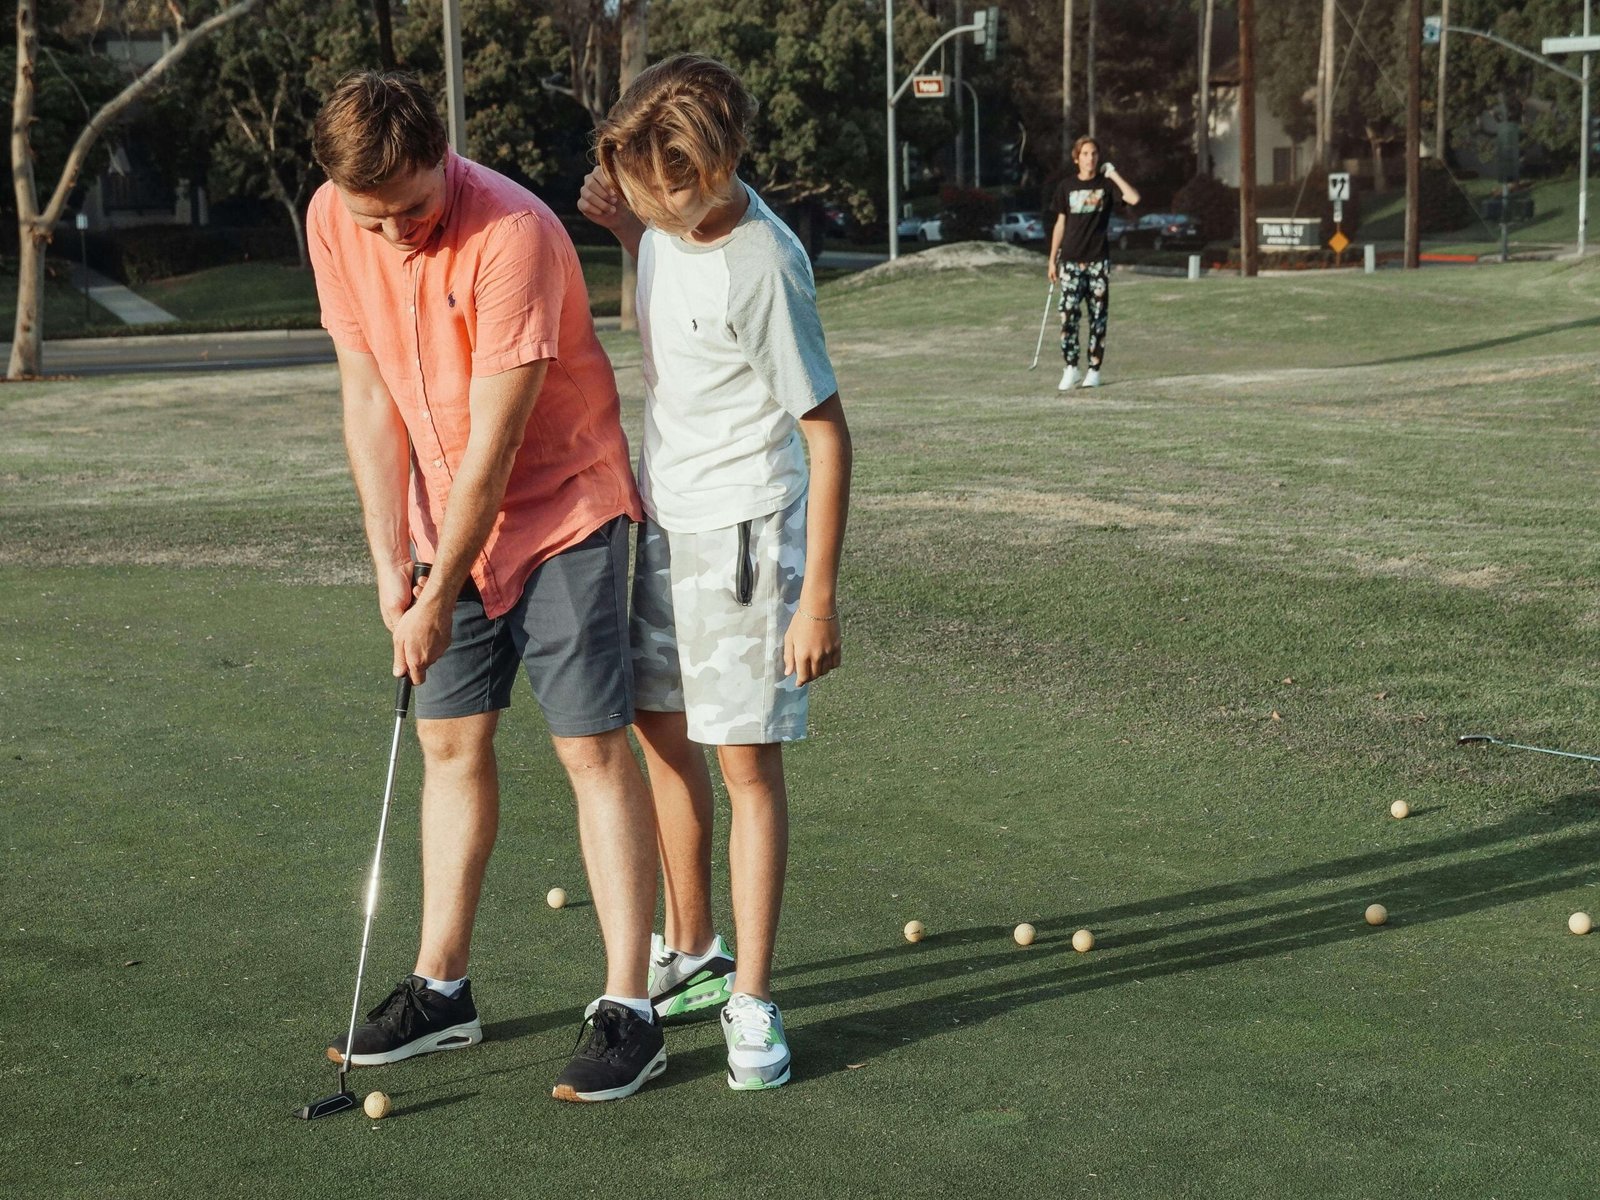 golfers training